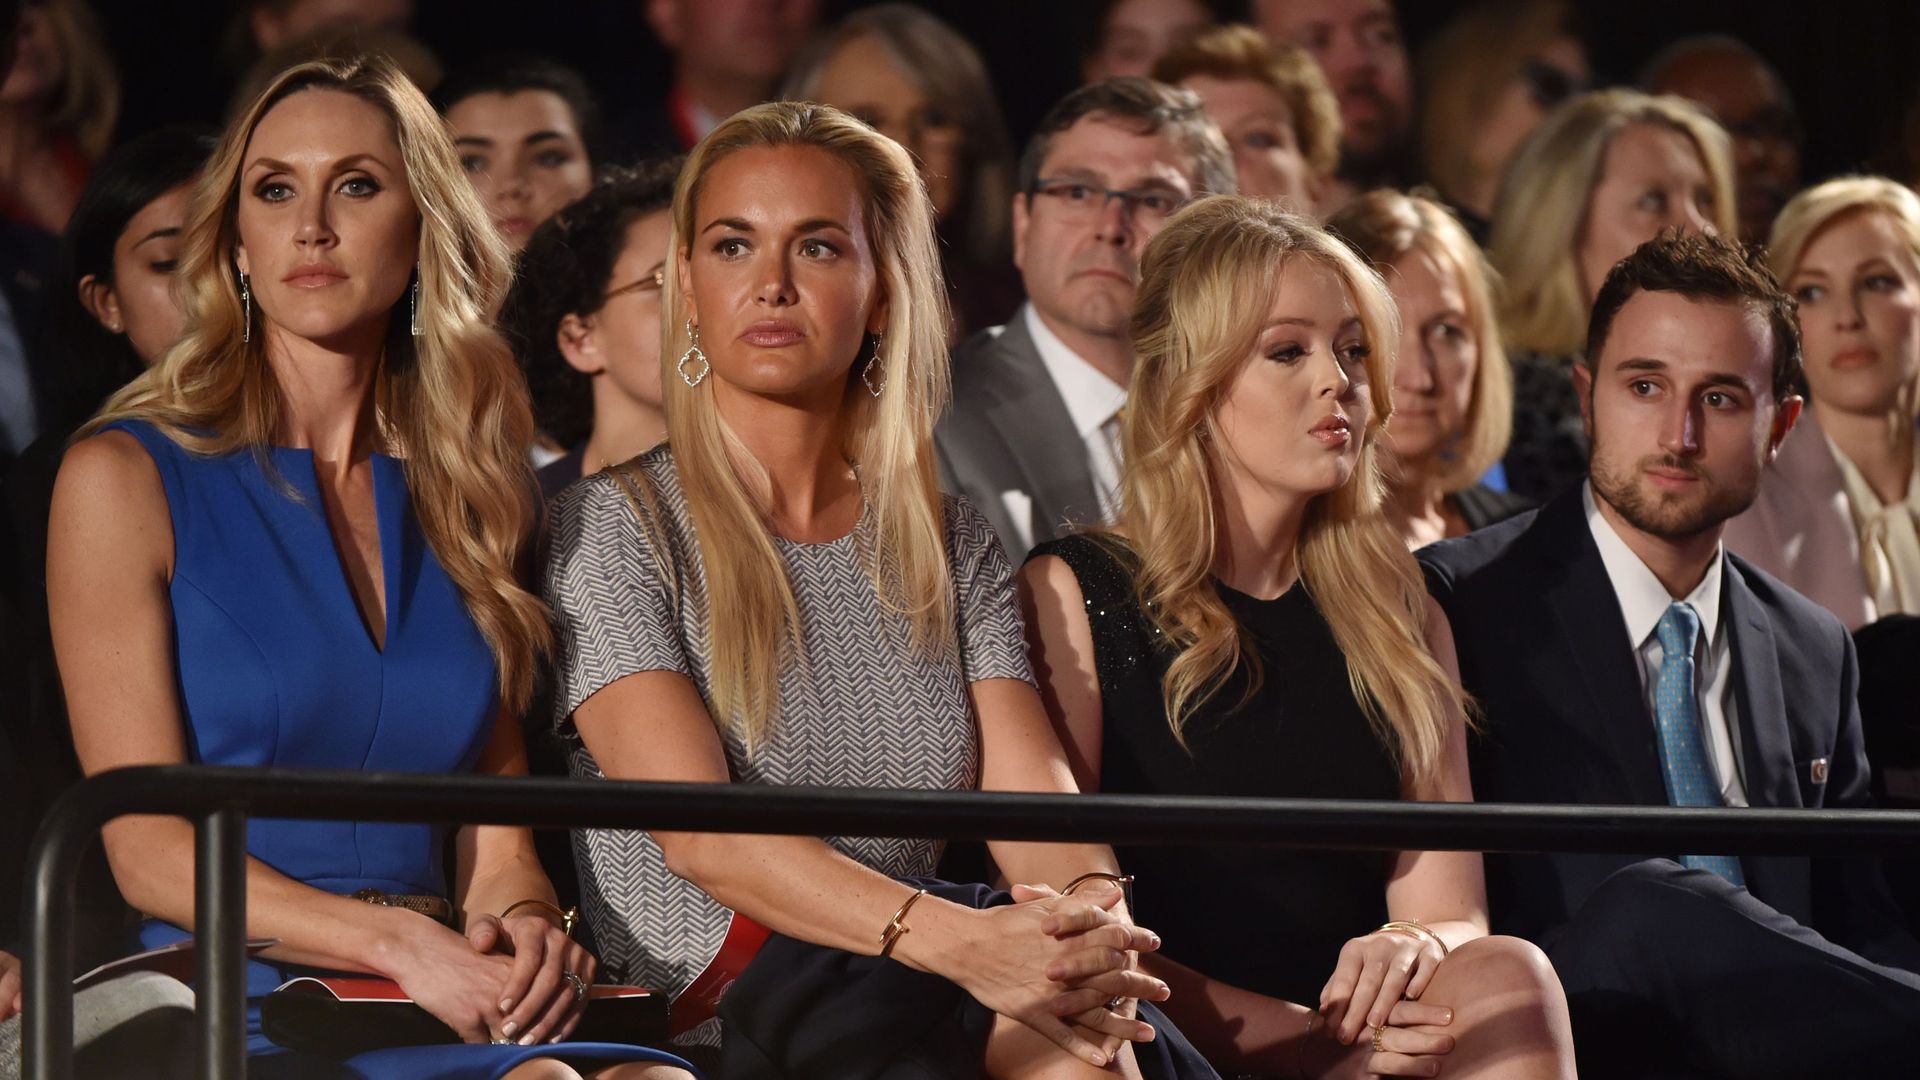 Lara Yunask et Vanessa Haydon, les belle-filles de Donald Trump, et sa fille, Tiffany Trump, lors du débat TV l'opposant à Hillary Clinton, le 9 octobre 2016.